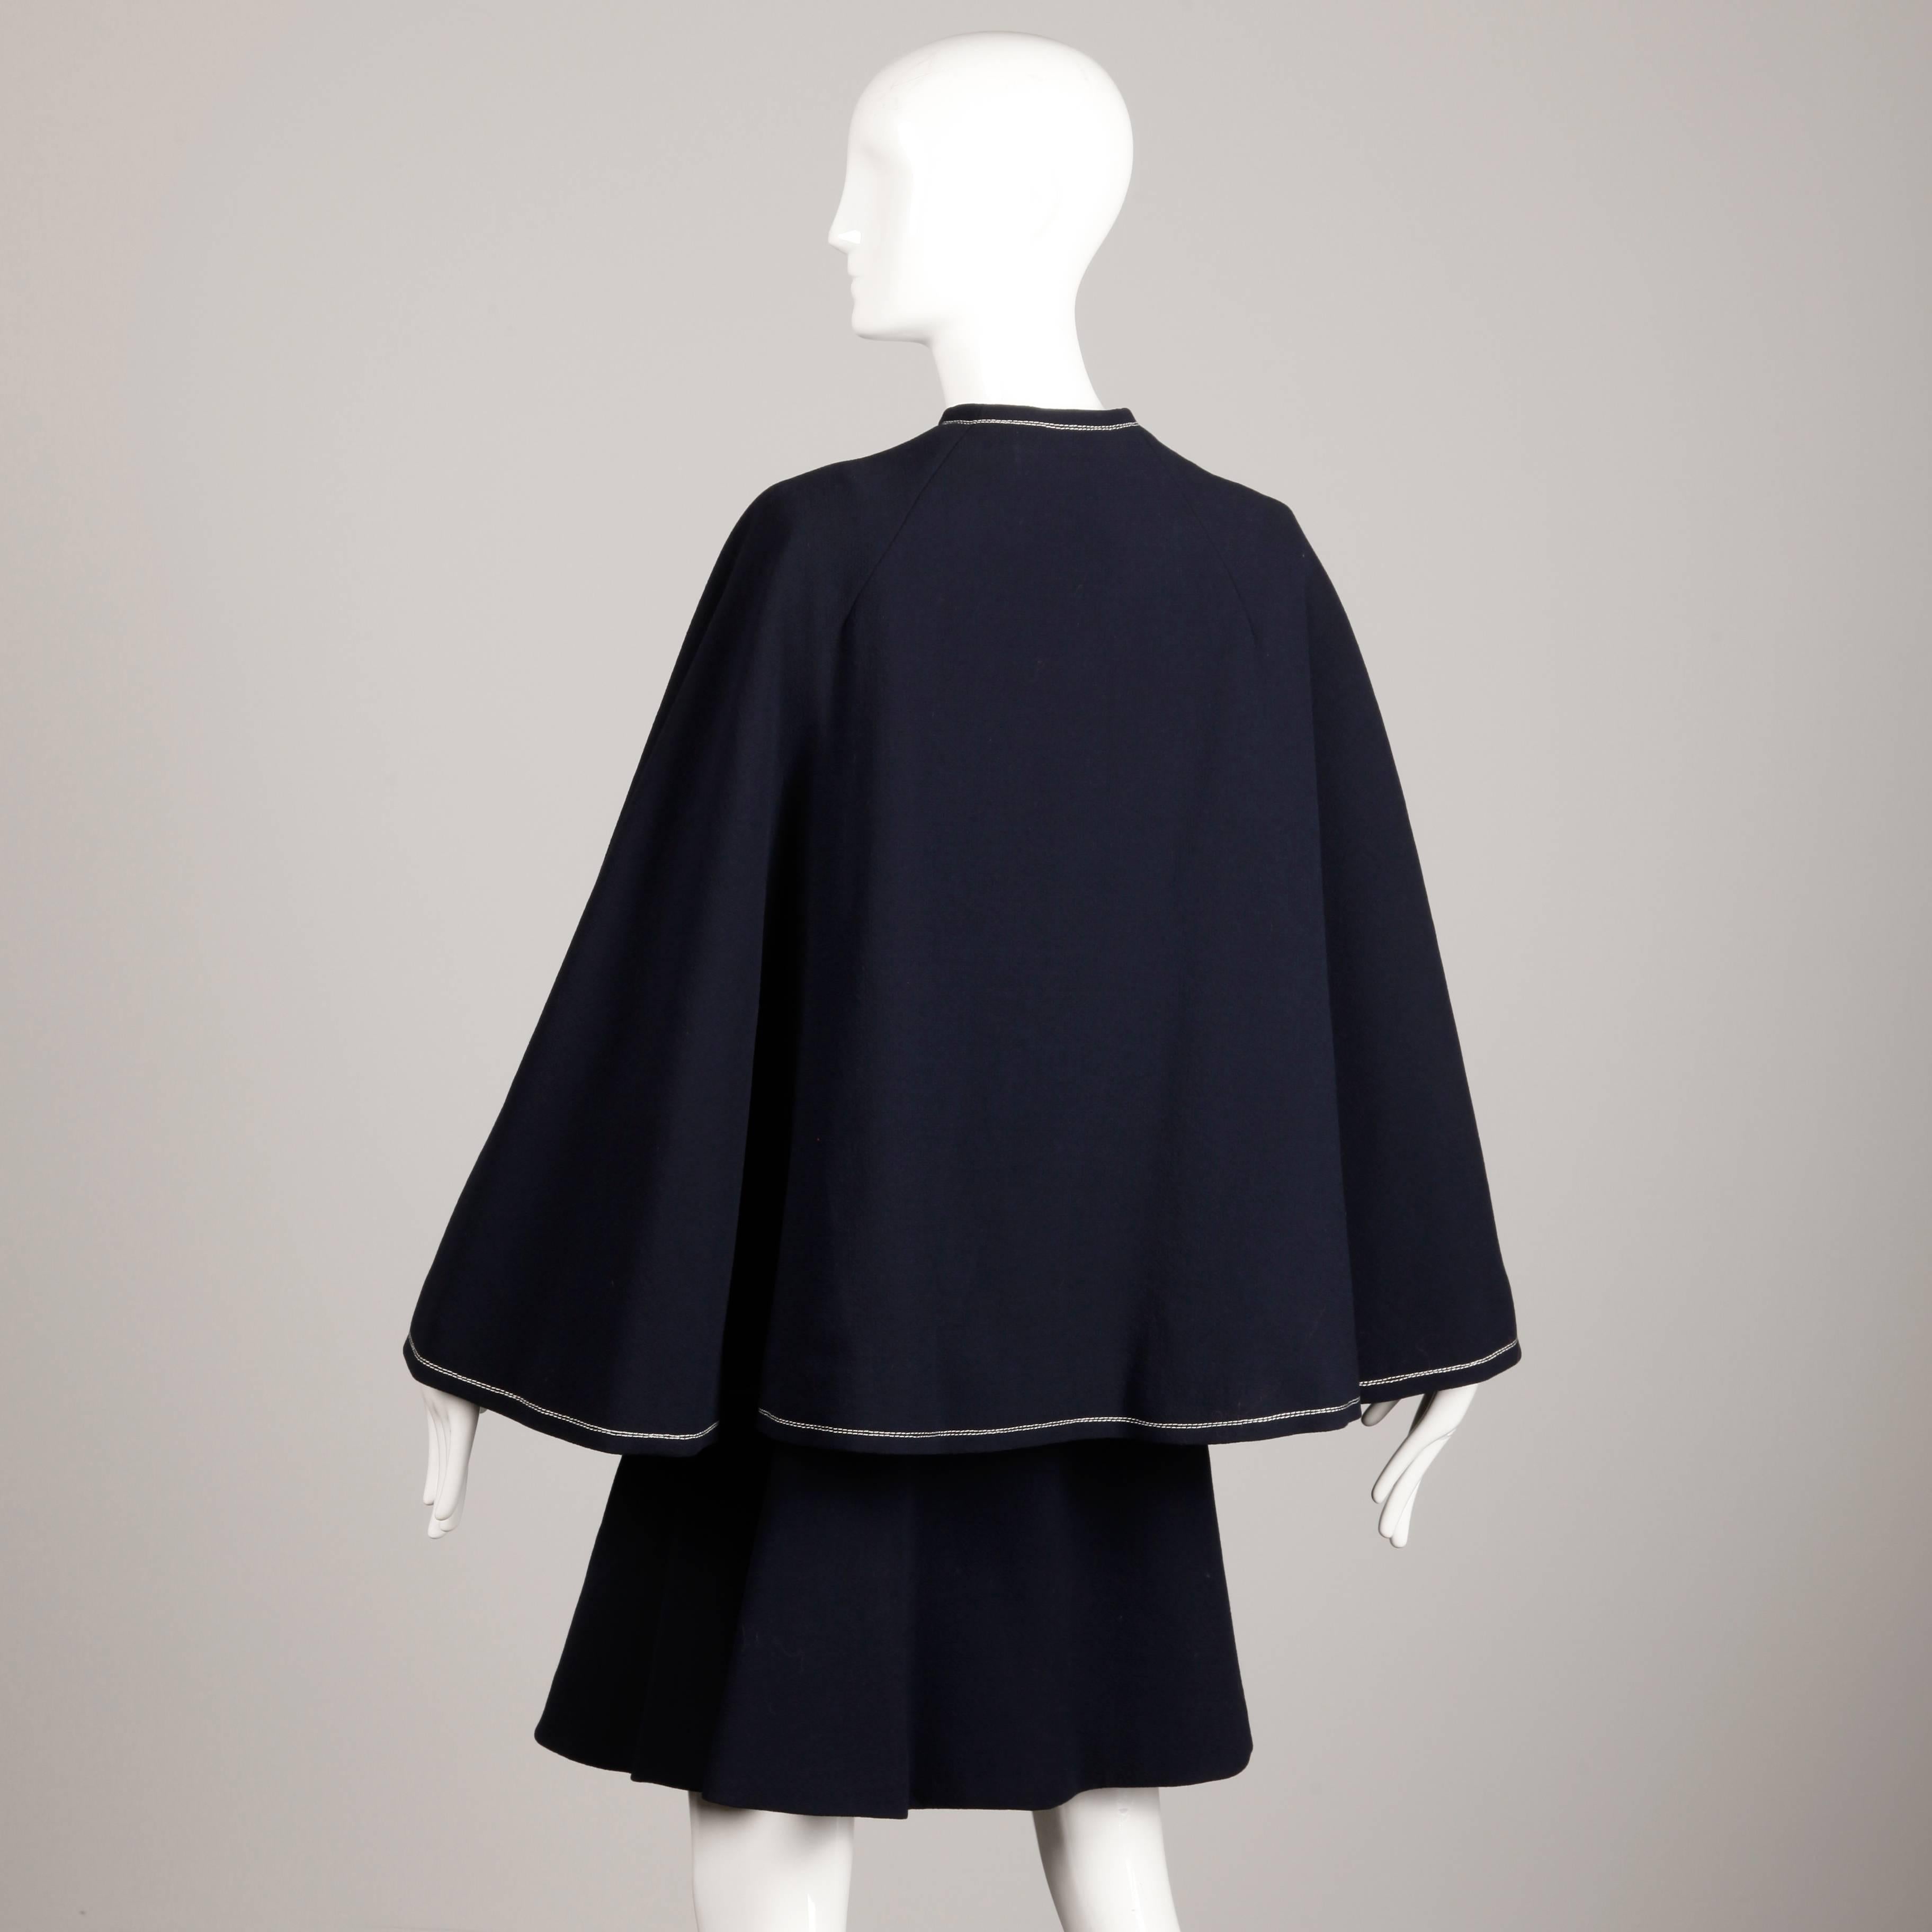 Black Convertible 1960s Ronald Amey Demi-Couture Vintage Wool + Silk Cape Dress Coat For Sale